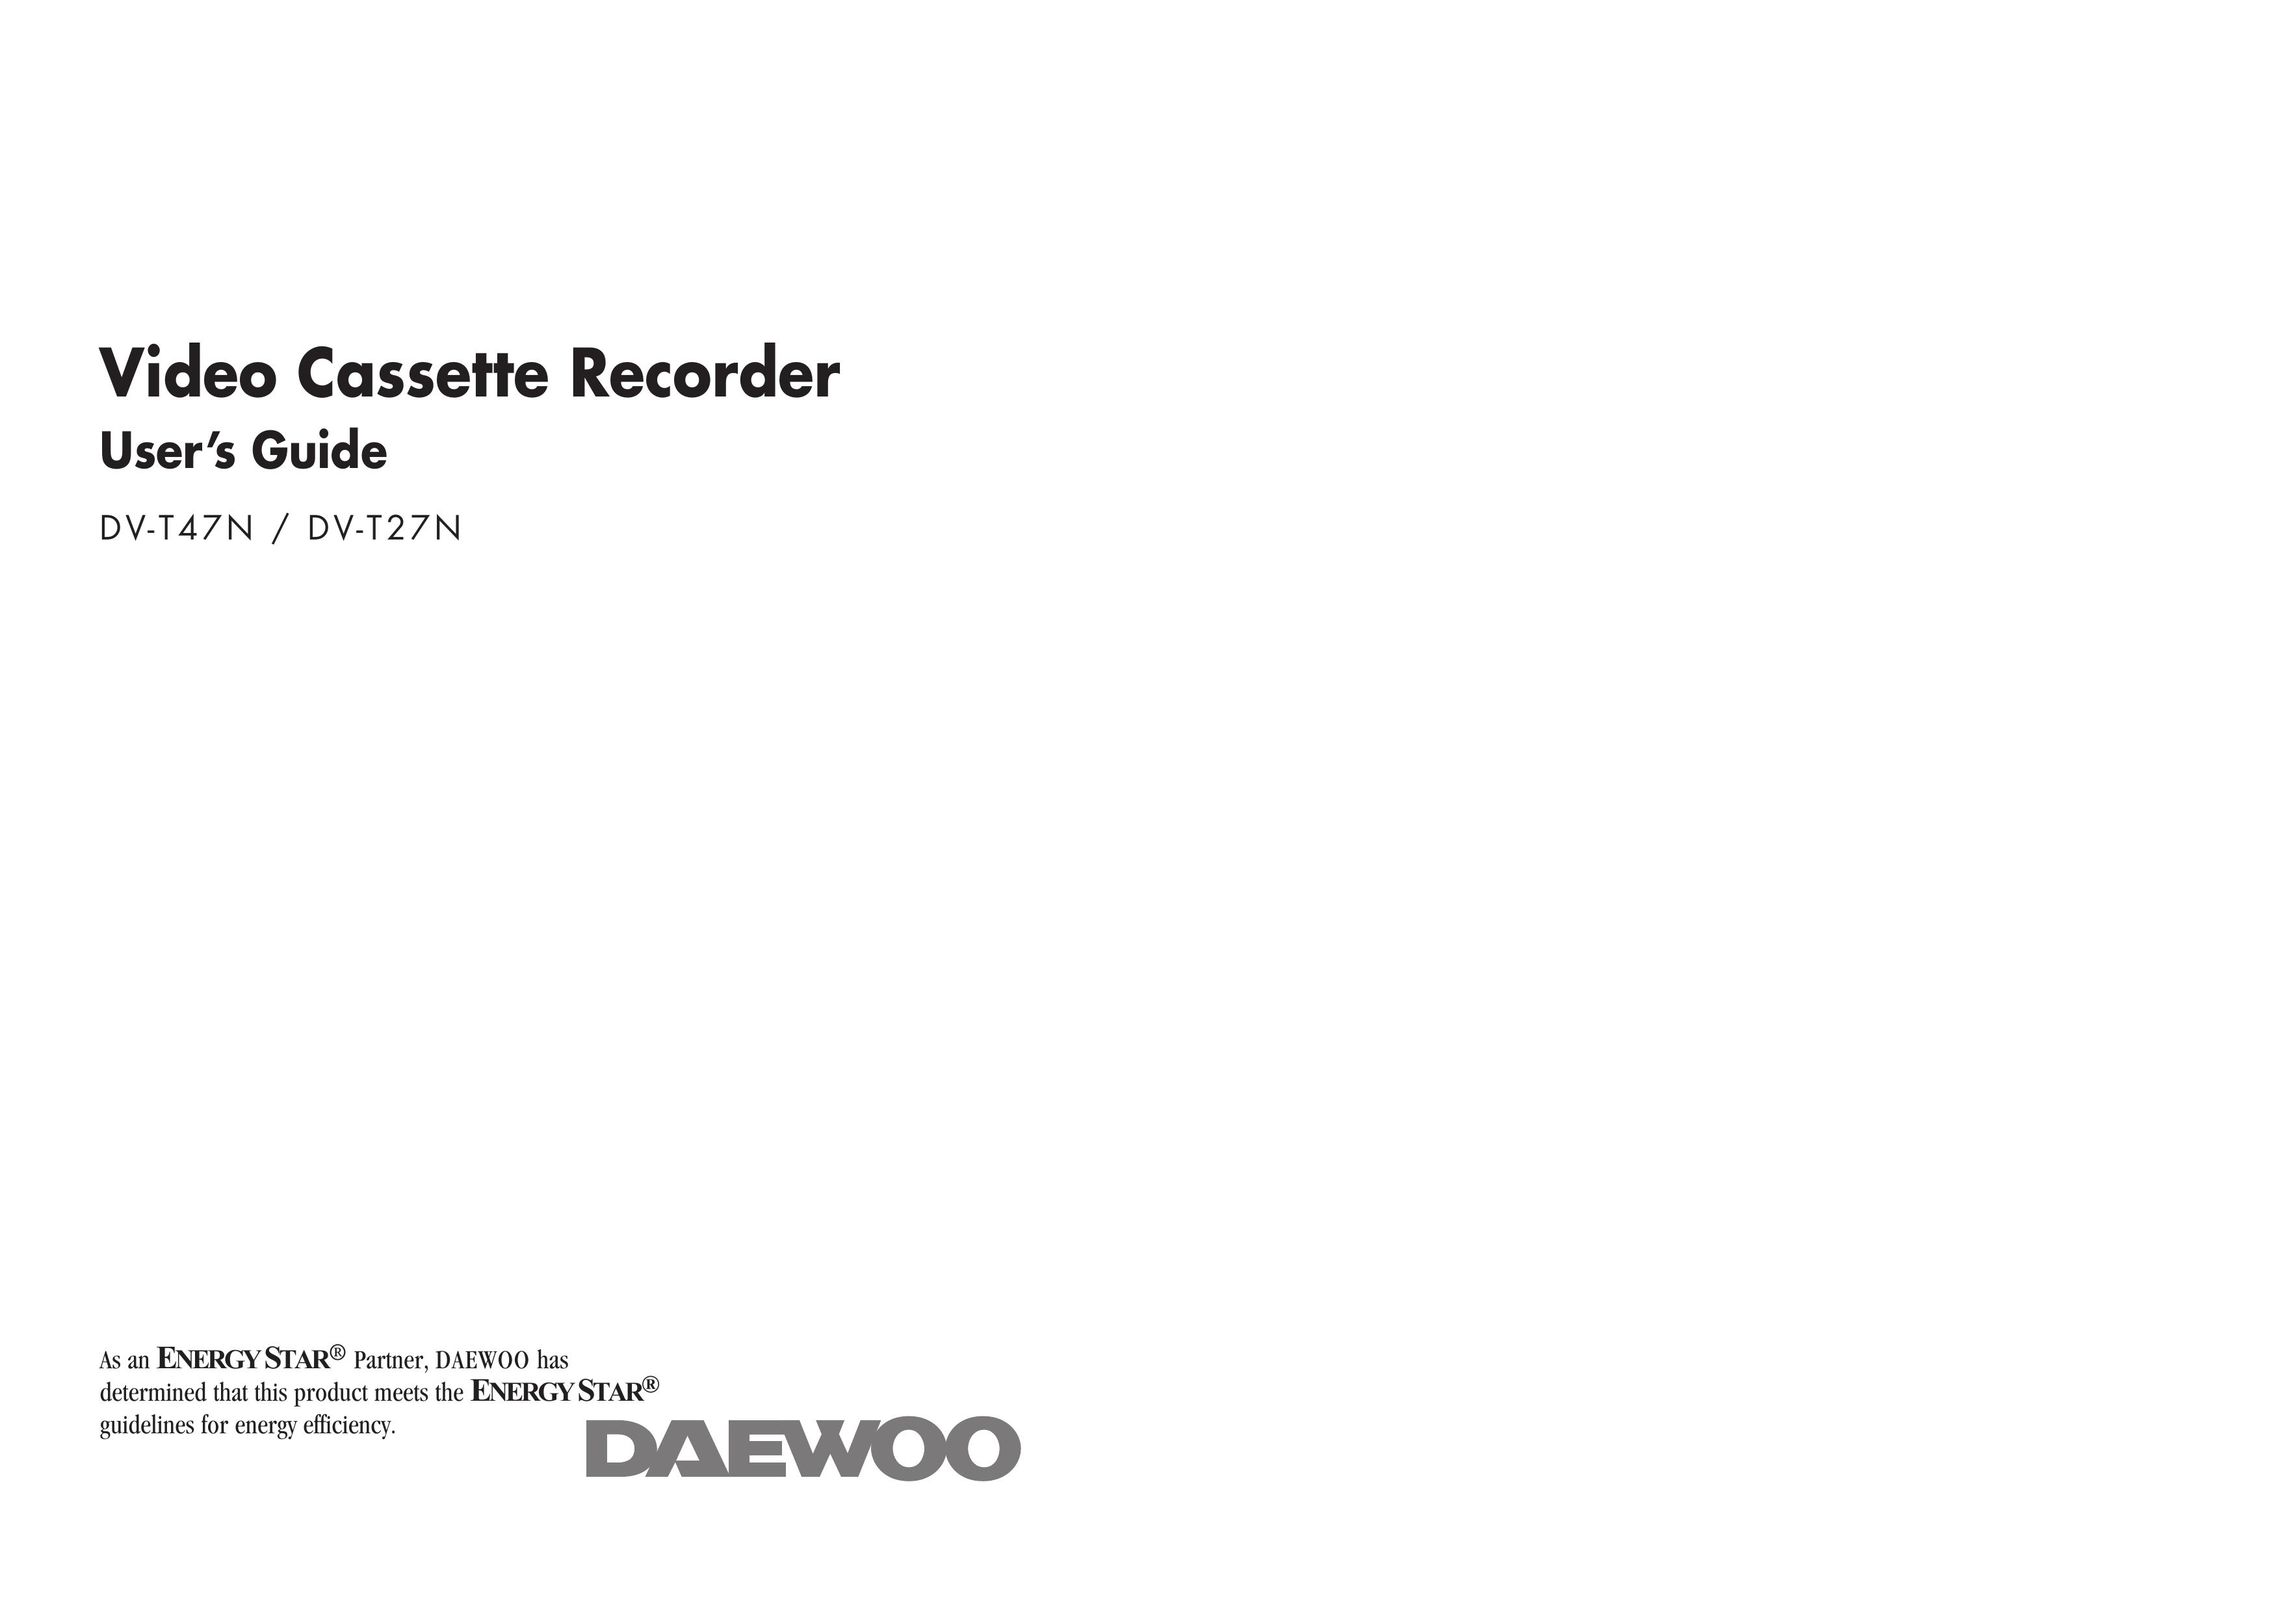 Daewoo DV-T27N VCR User Manual